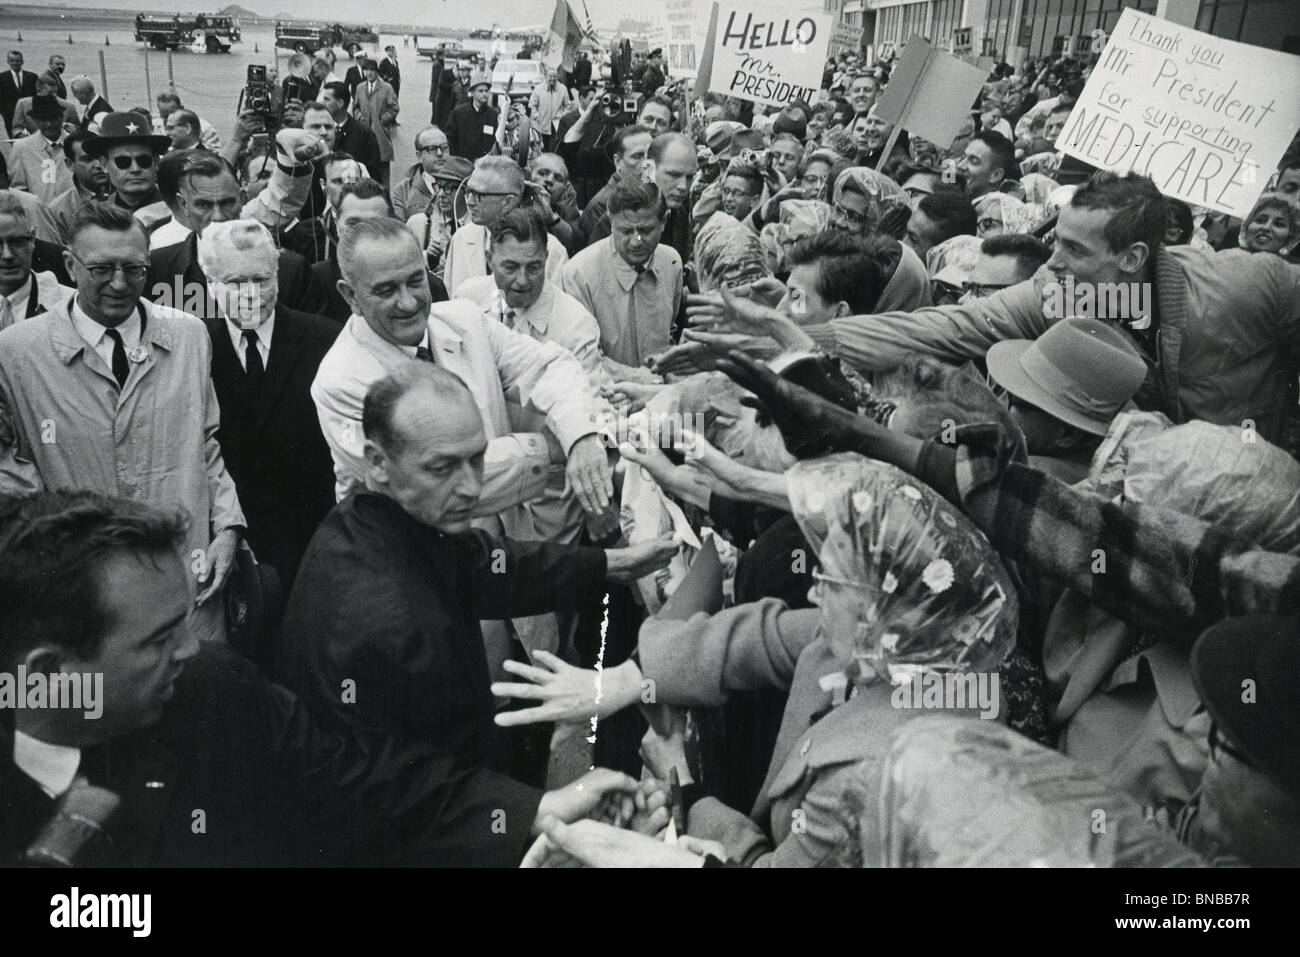 lyndon-b-johnson-campaigning-in-the-1964-us-presidential-elections-BNBB7R.jpg